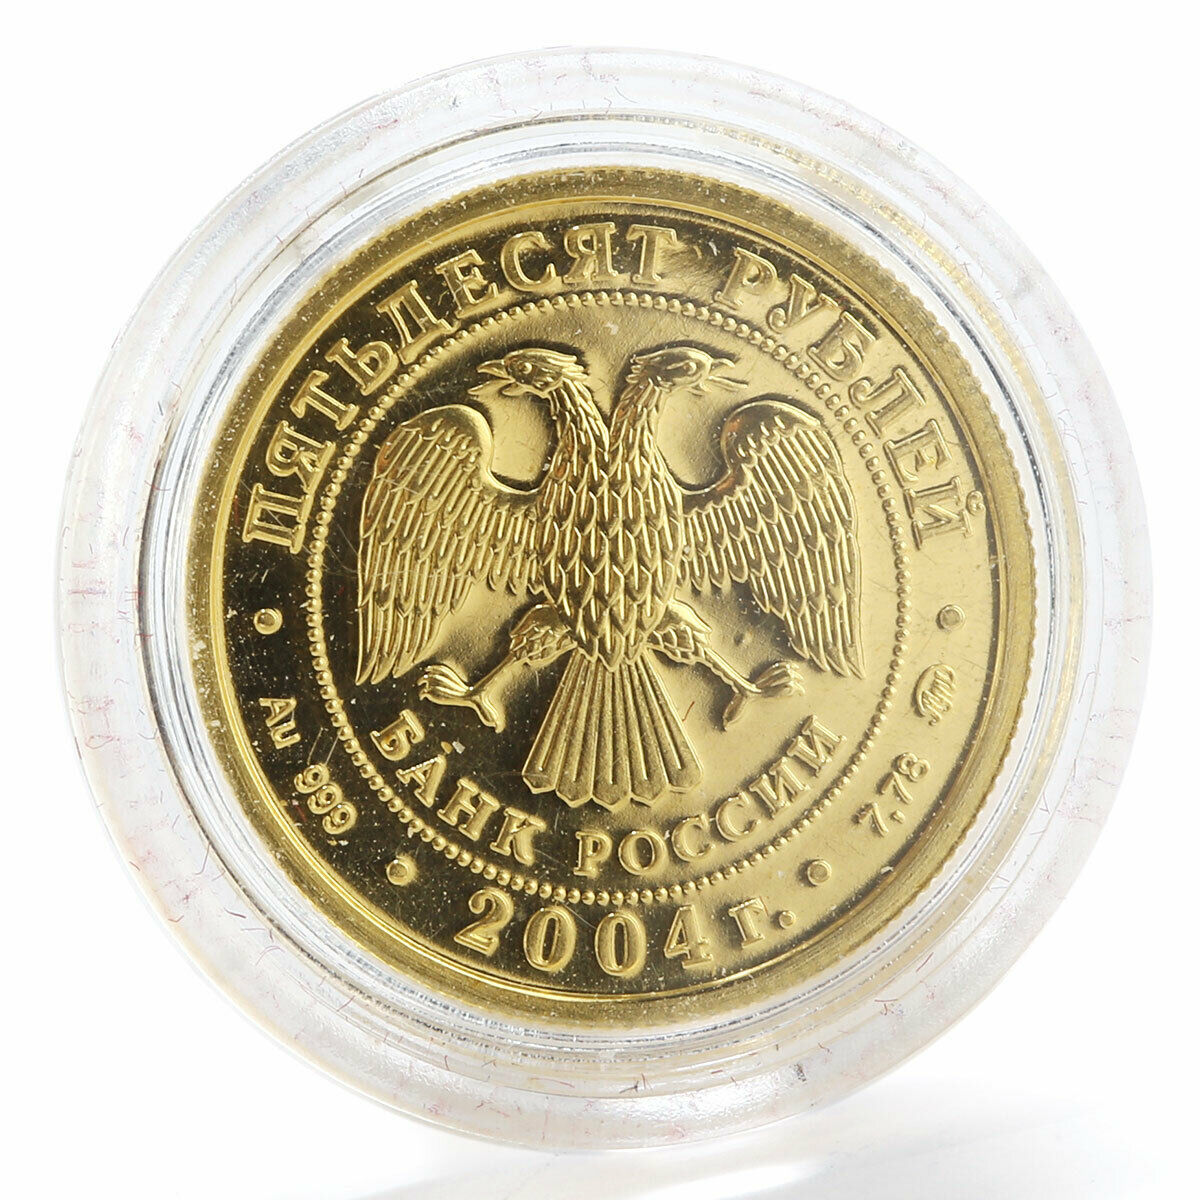 Russia 50 rubles Zodiac Gemini gold coin 2004 | Coinsberg